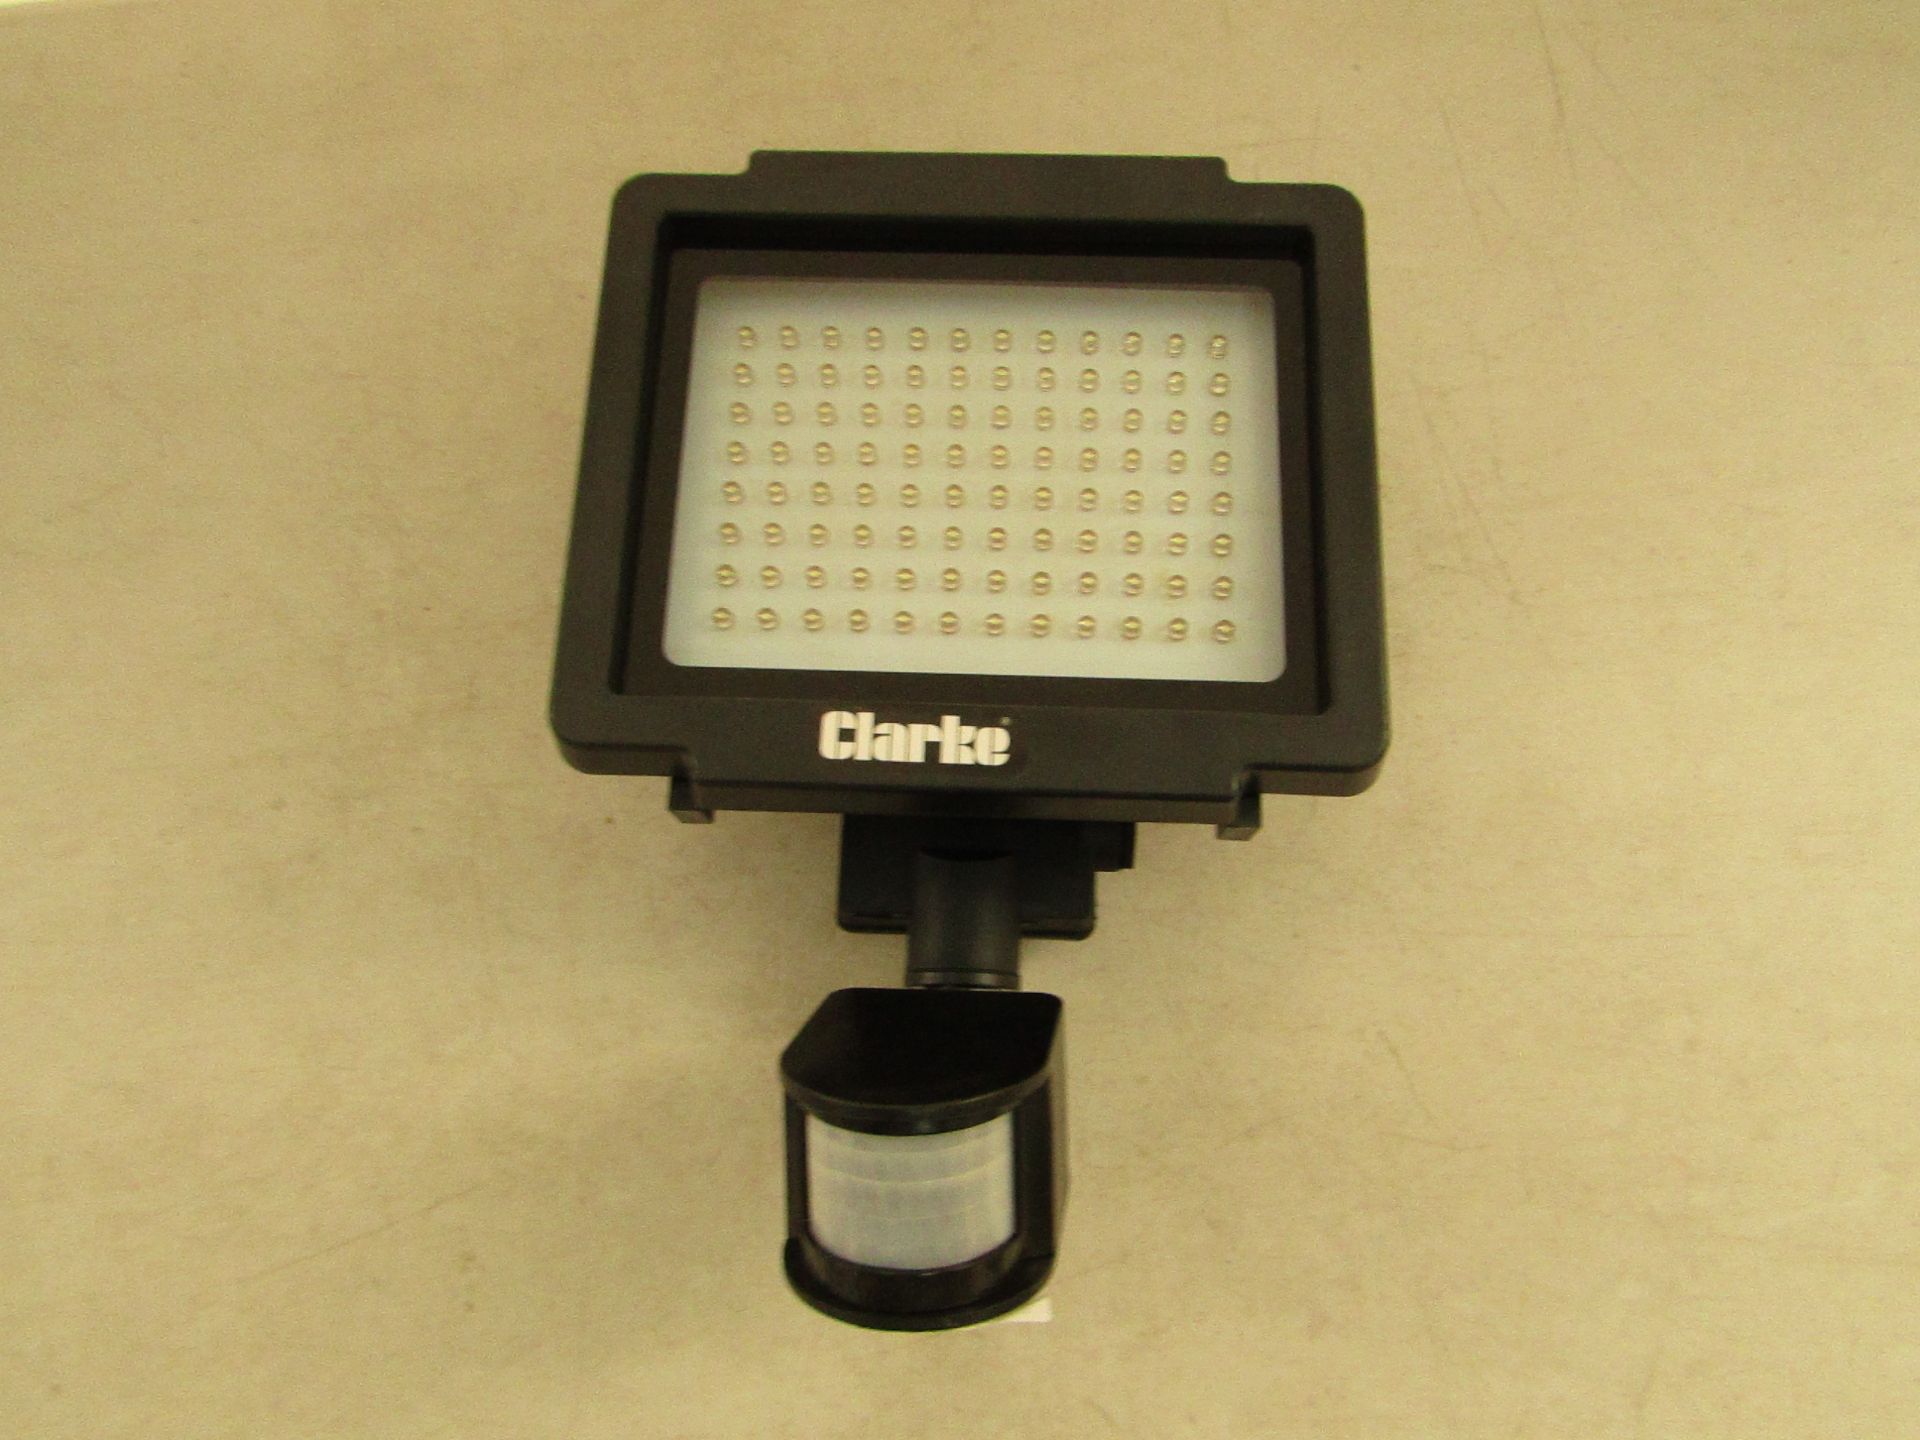 Clarke CL6PIR 6w 96 LED security light with PIR motion sensor www.machinemart.co.uk/p/clarke-